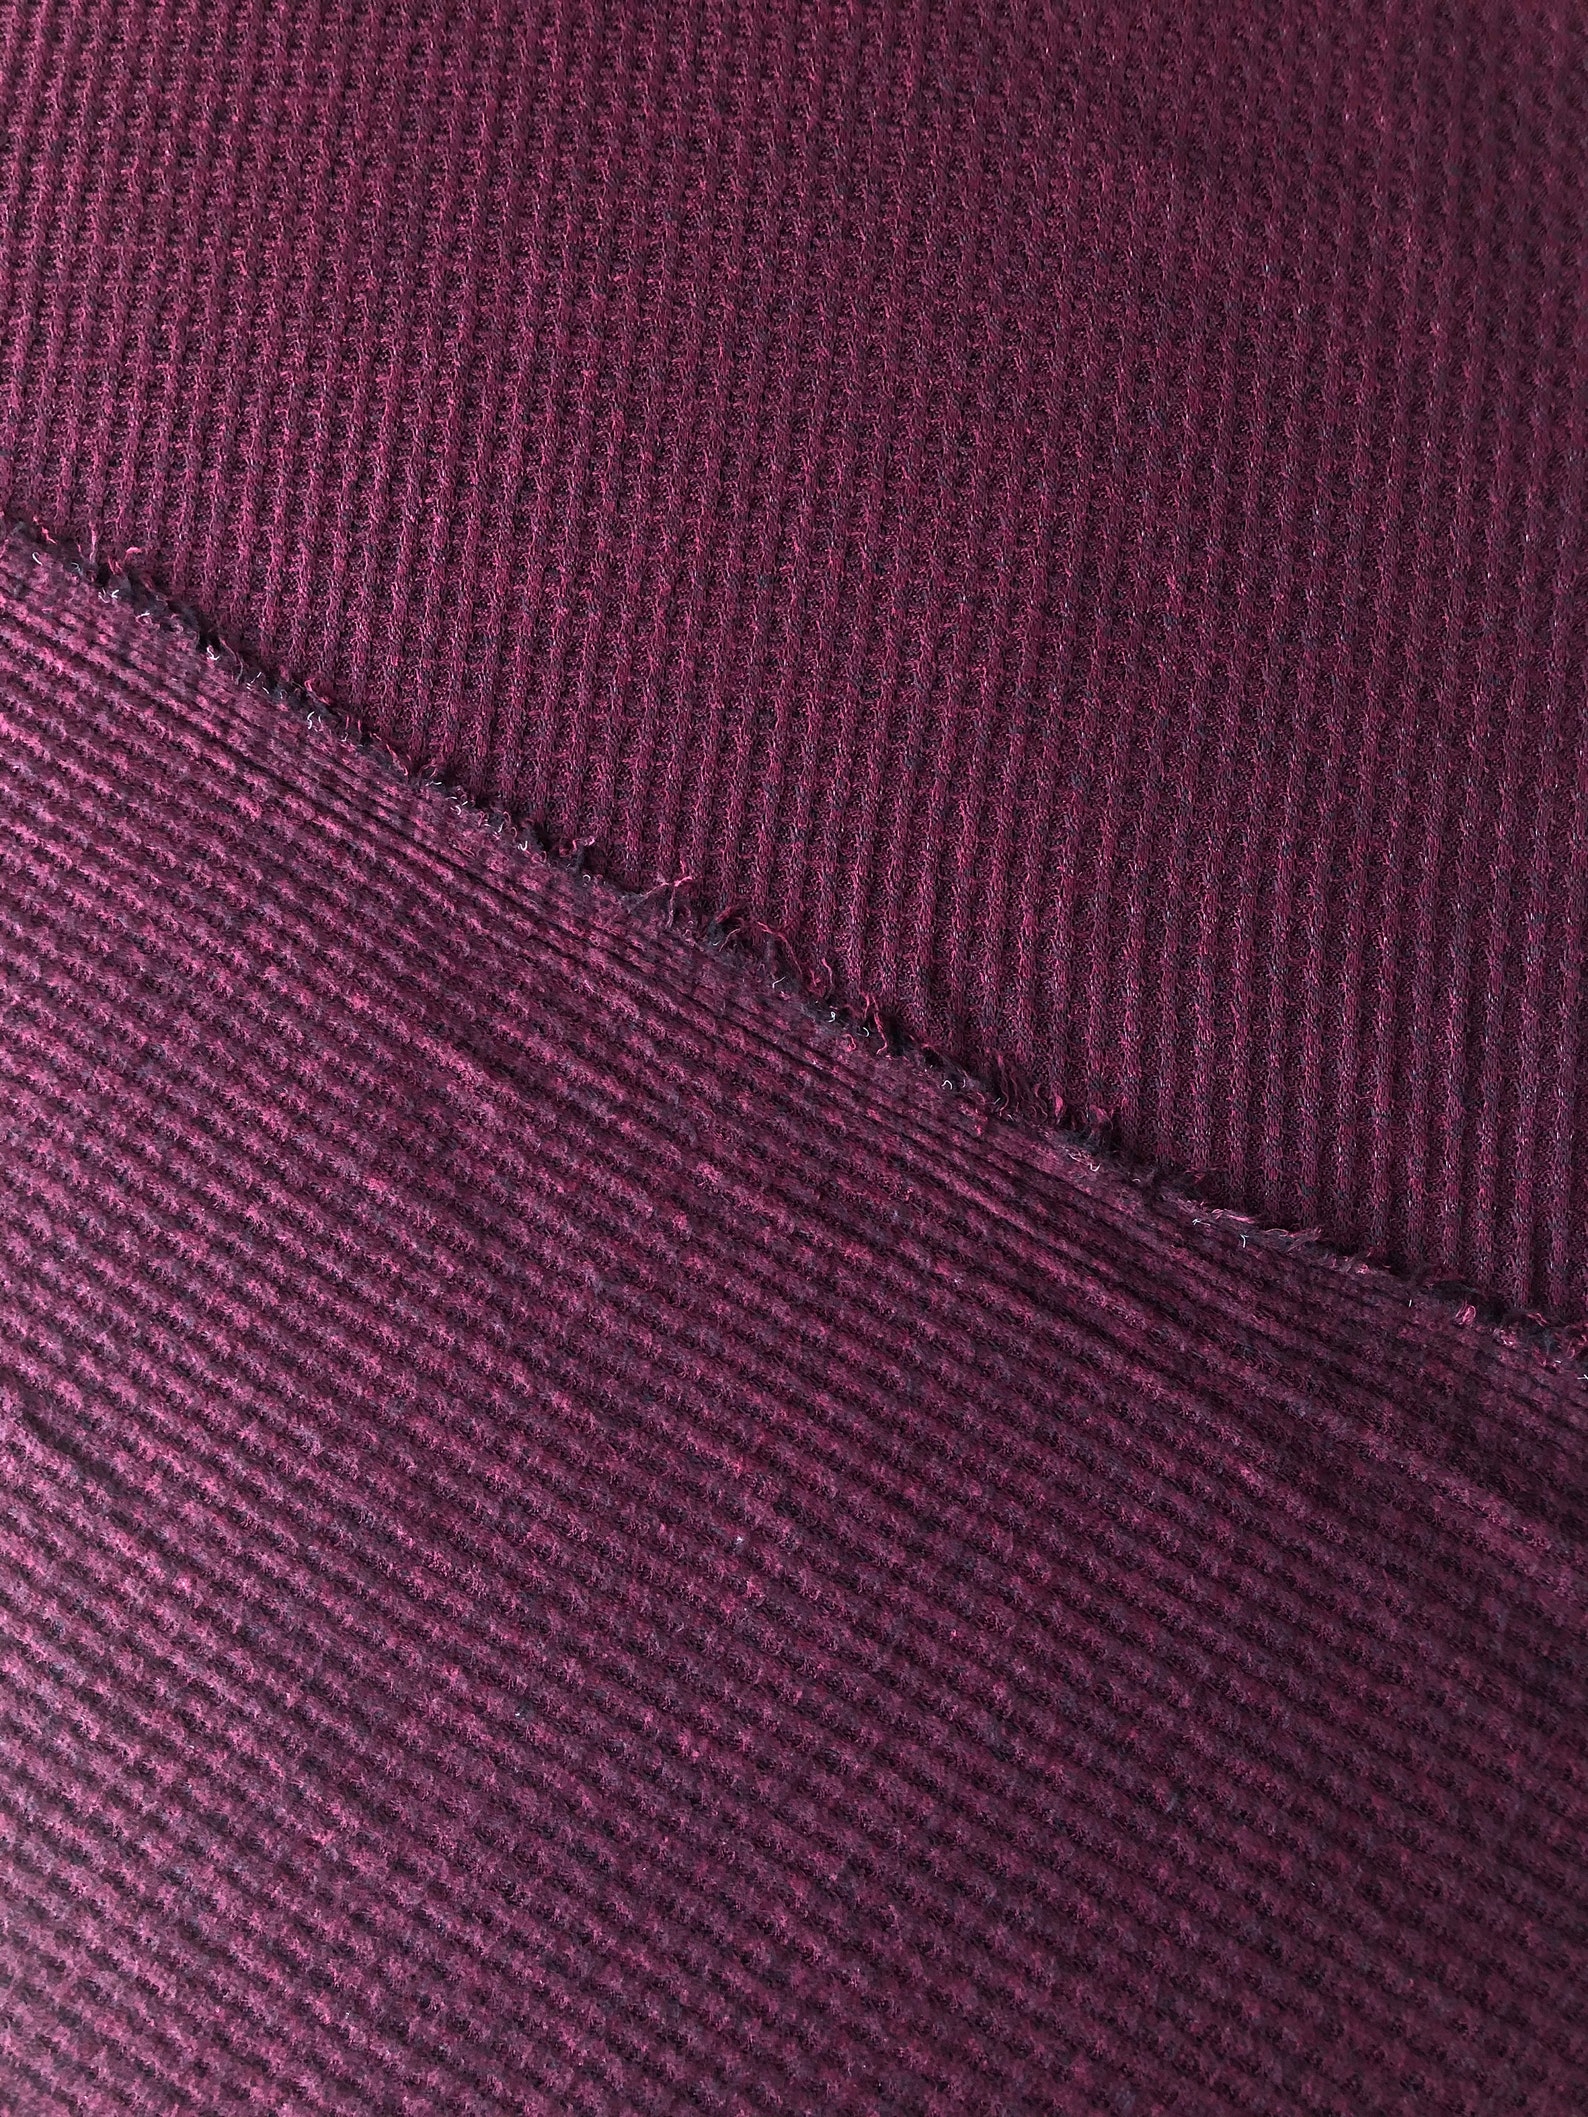 Thermal Knit Fabric Waffle Knit Fabric by the Yard 2 Way - Etsy UK